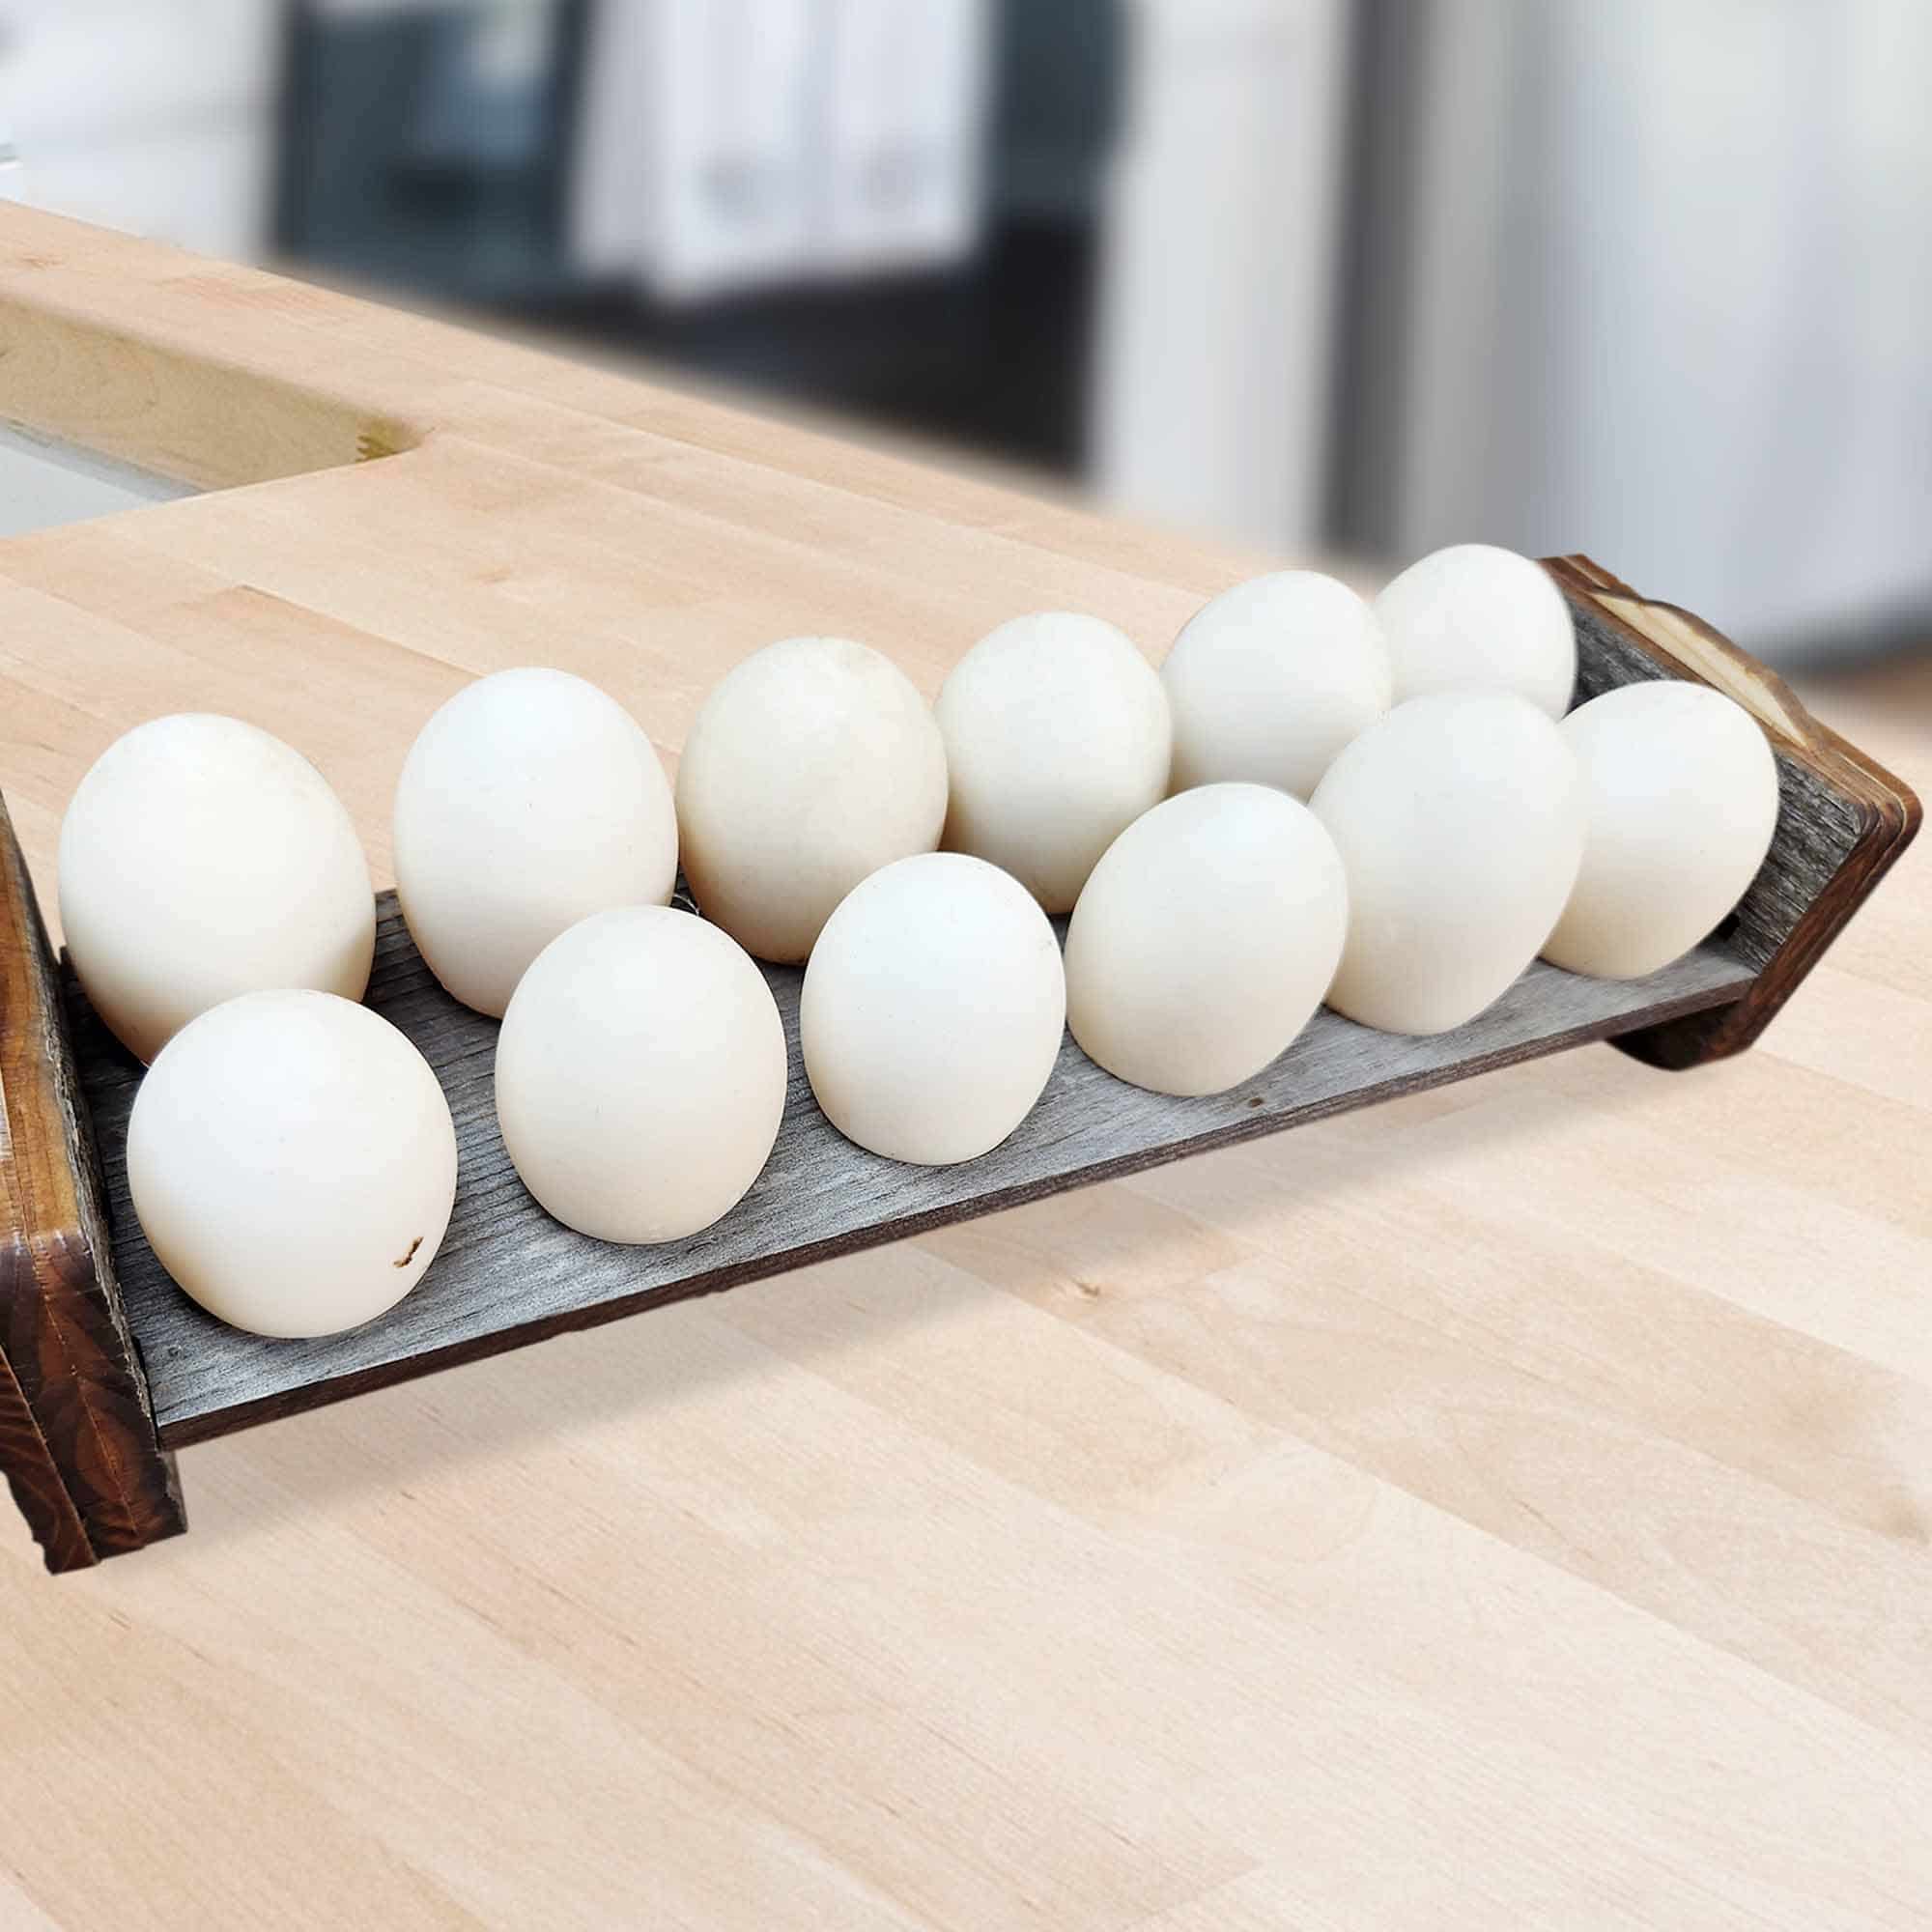 https://rockinwoodusa.com/wp-content/uploads/2023/03/Reclaimed-Wood-Egg-Tray-on-Table-1-min.jpg